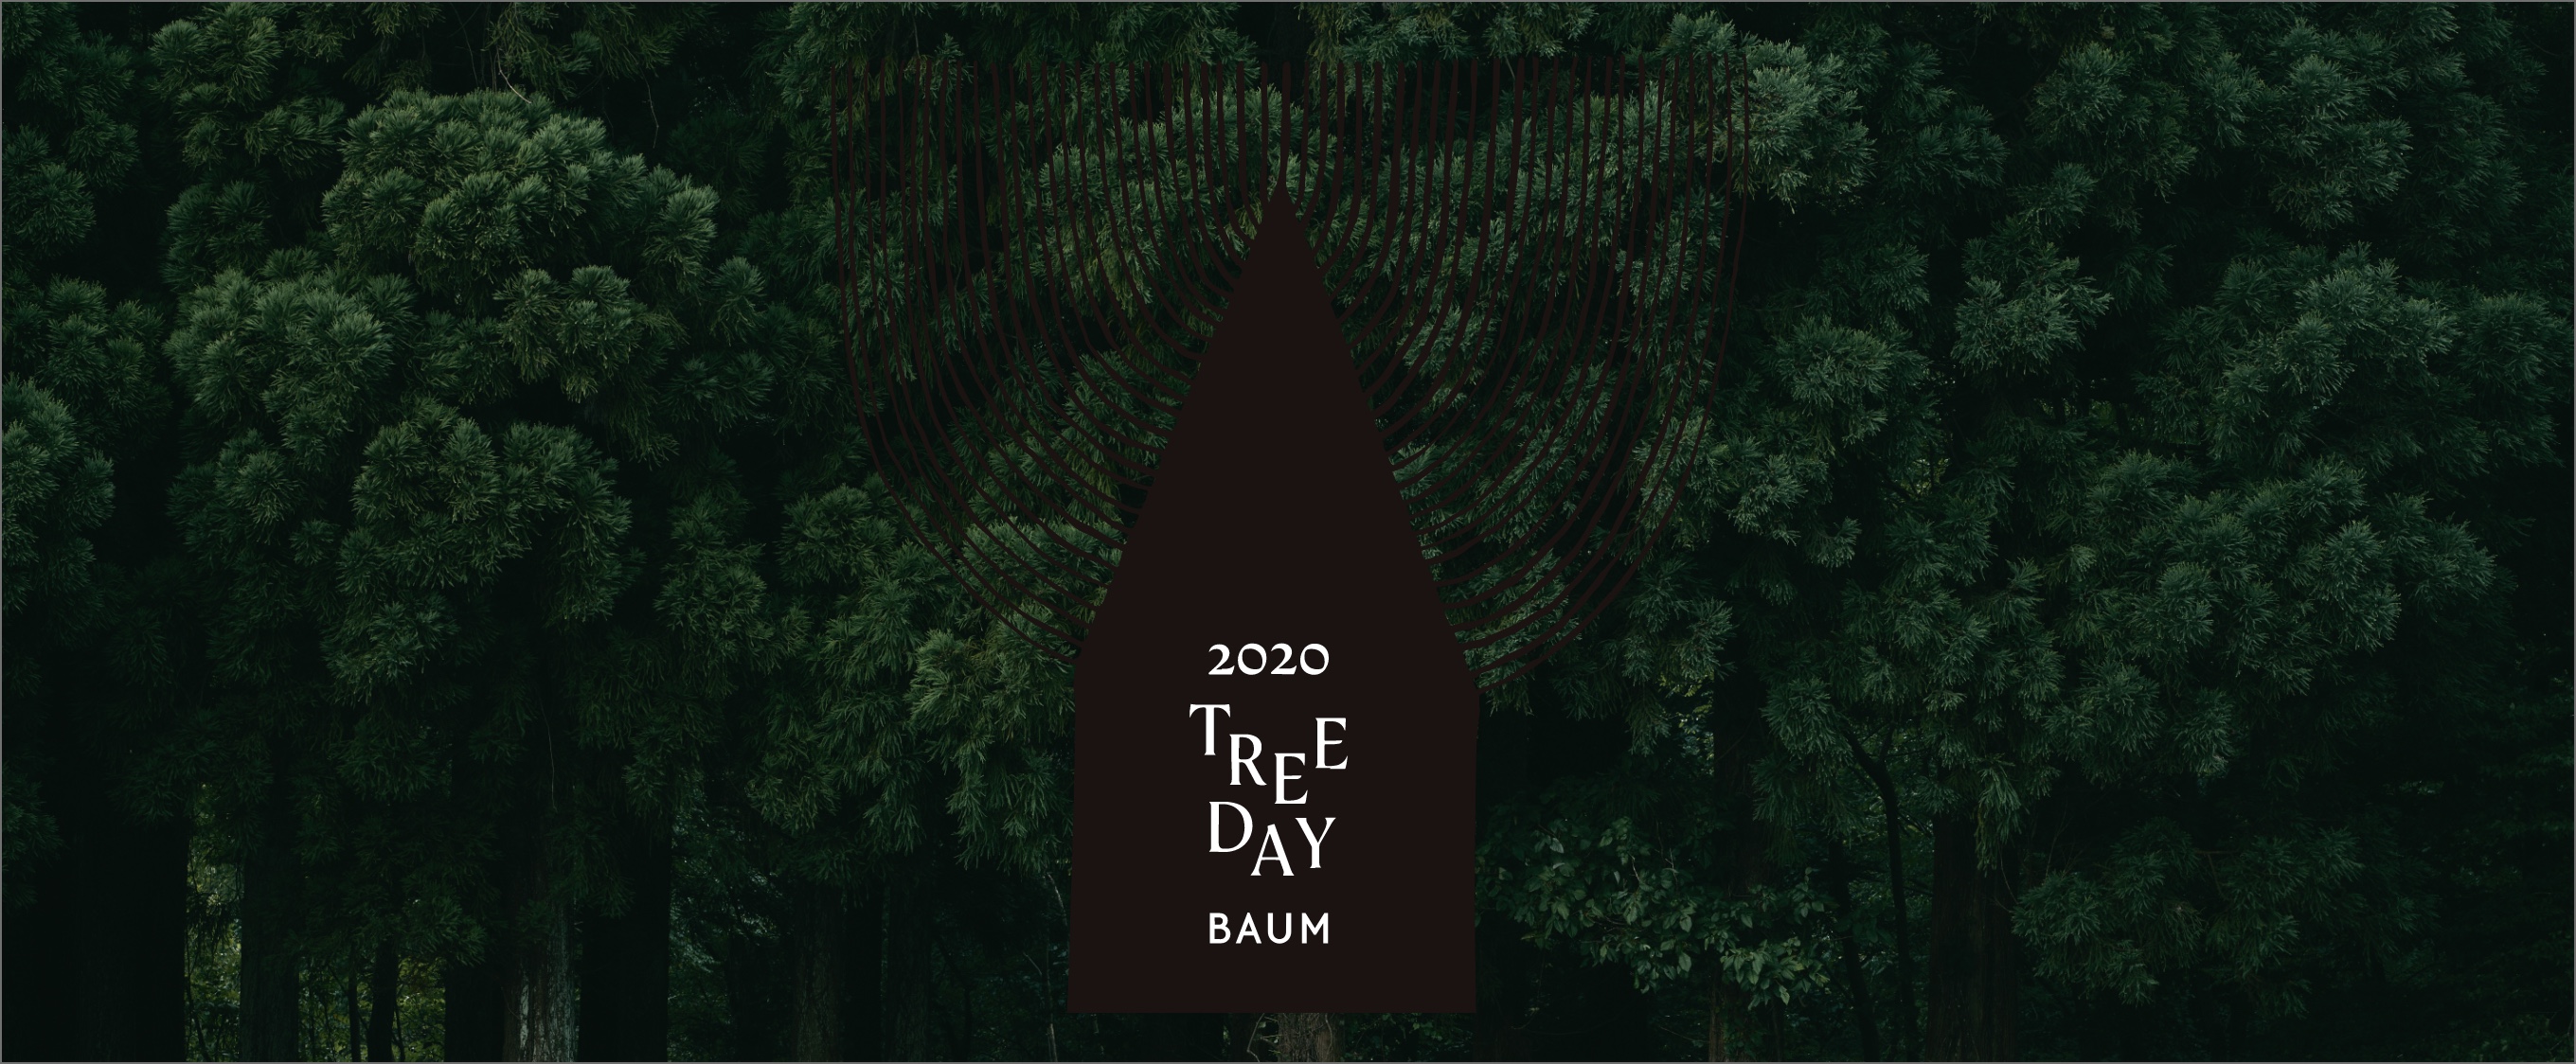 2020 TREEDAY BAUM